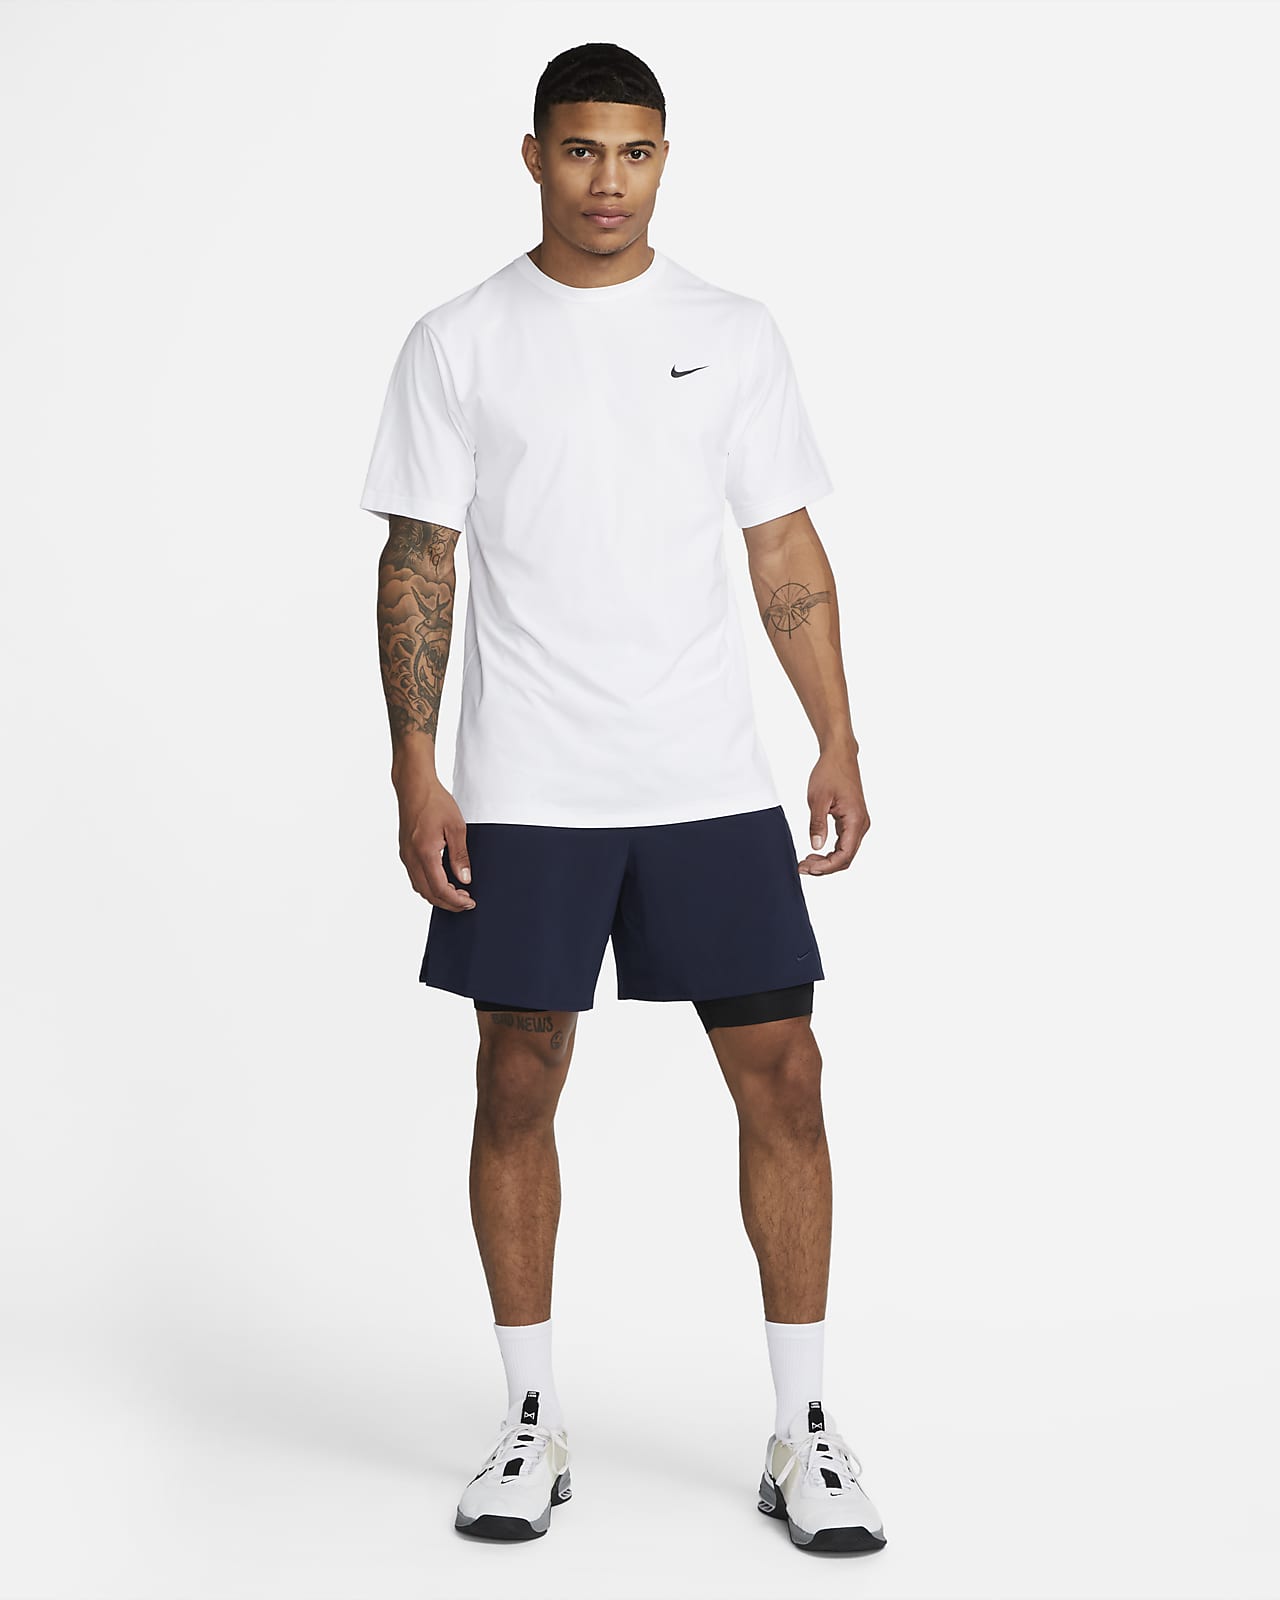 Nike Hyverse Men's Dri-FIT UV Short-sleeve Versatile Top. Nike NL